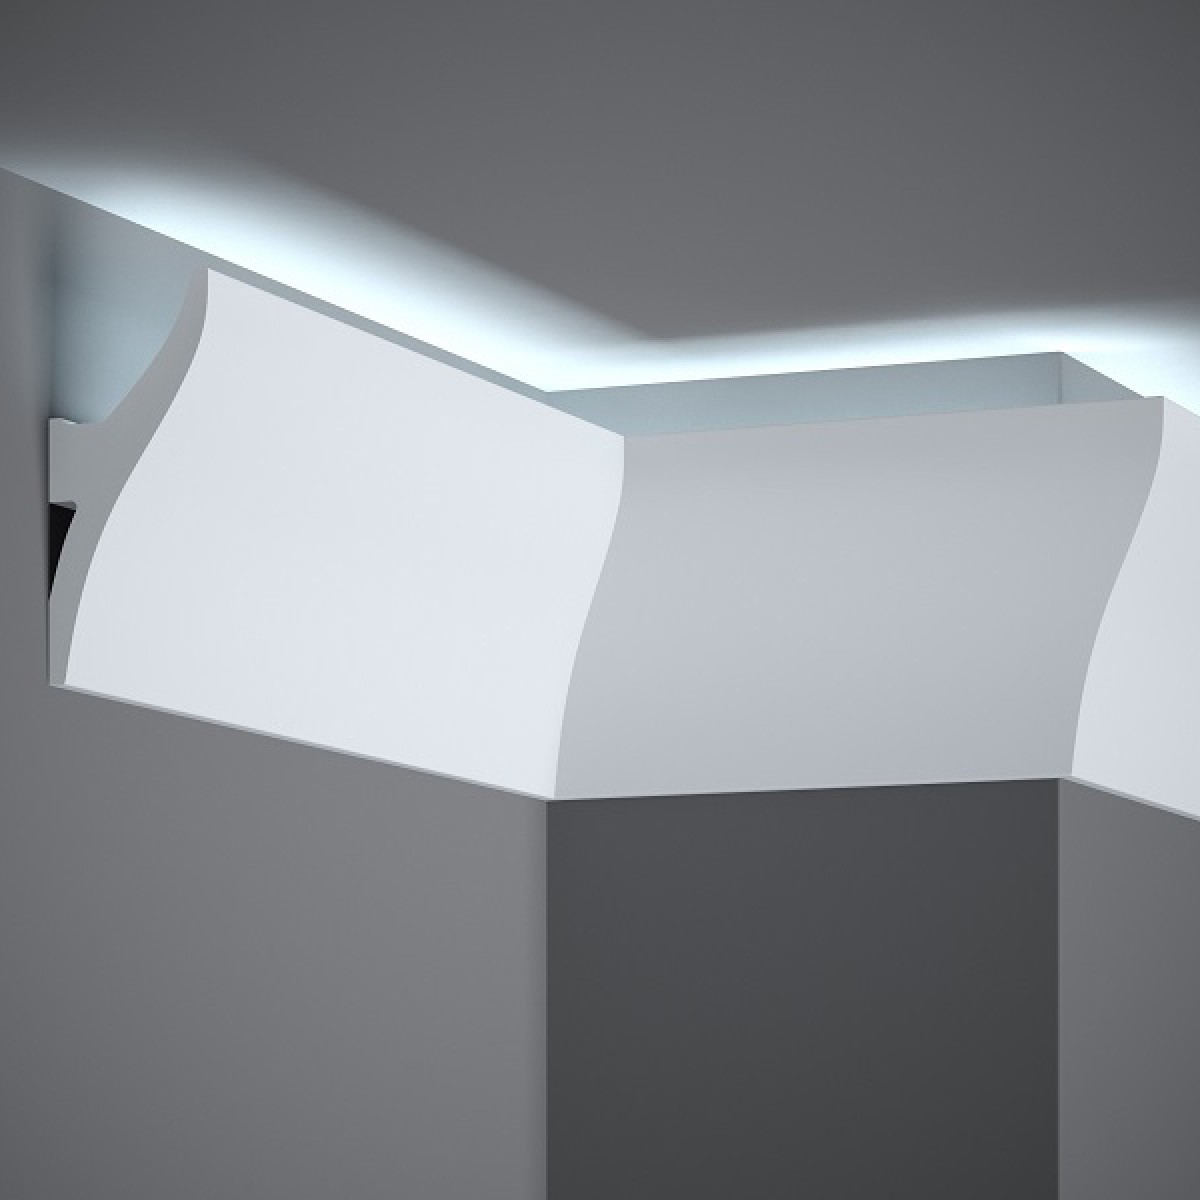 Scafe tavan (iluminat indirect, LED) Mardom Decor MRD-QL010, material: PolyForce